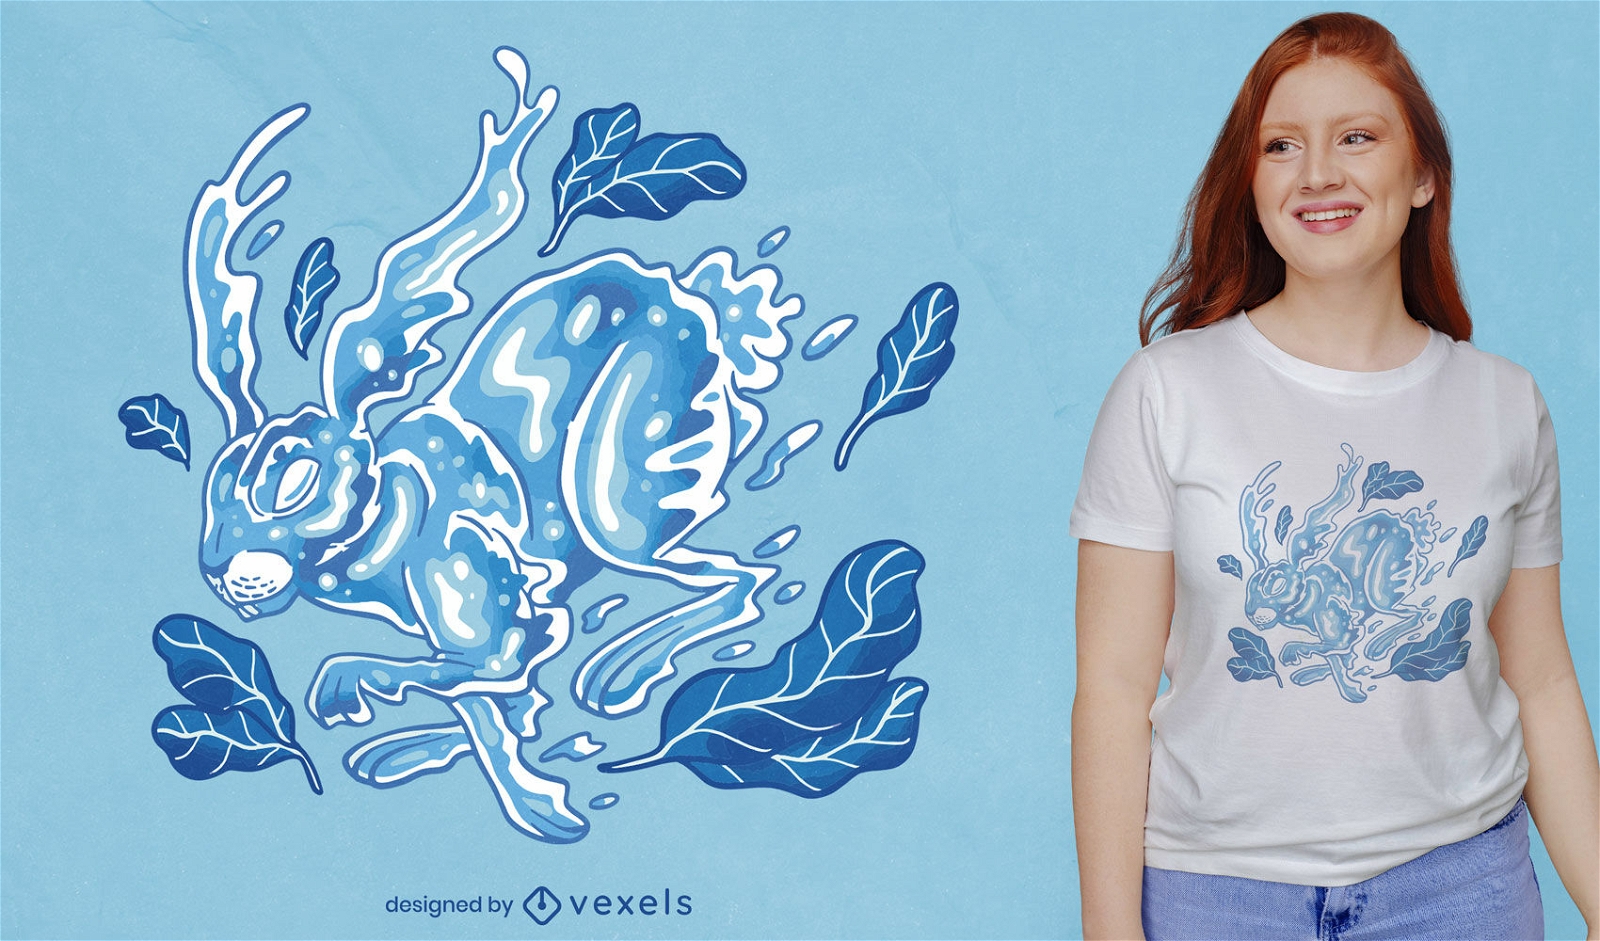 Water rabbit t-shirt design